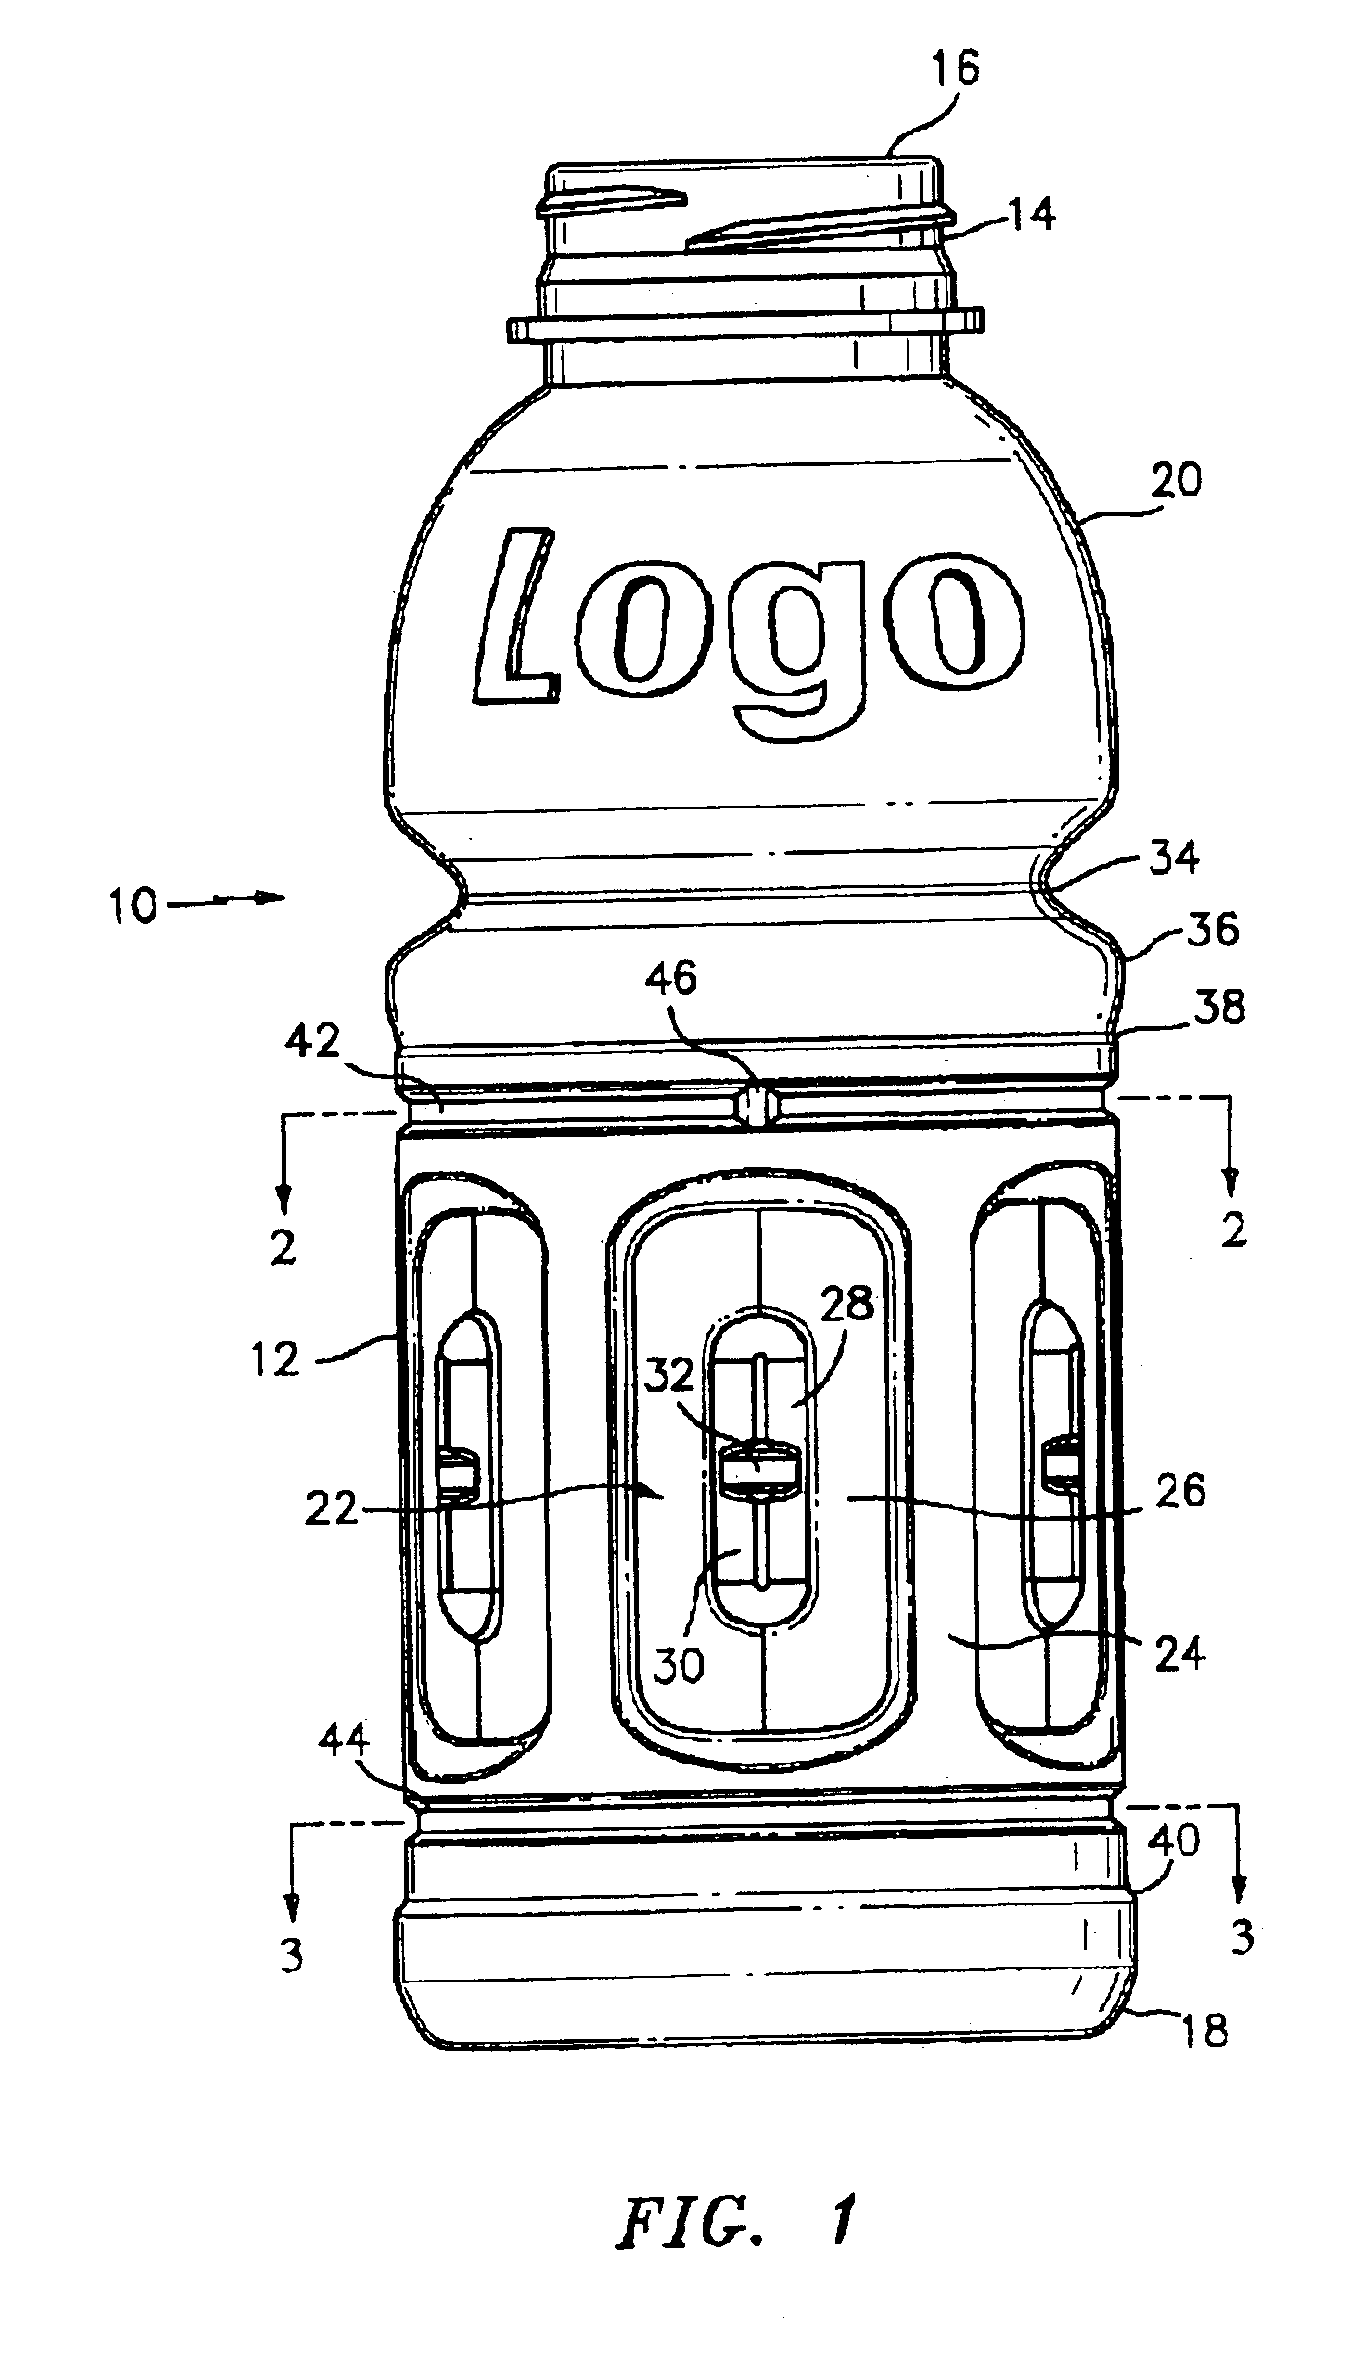 Hollow plastic bottle including vacuum panels